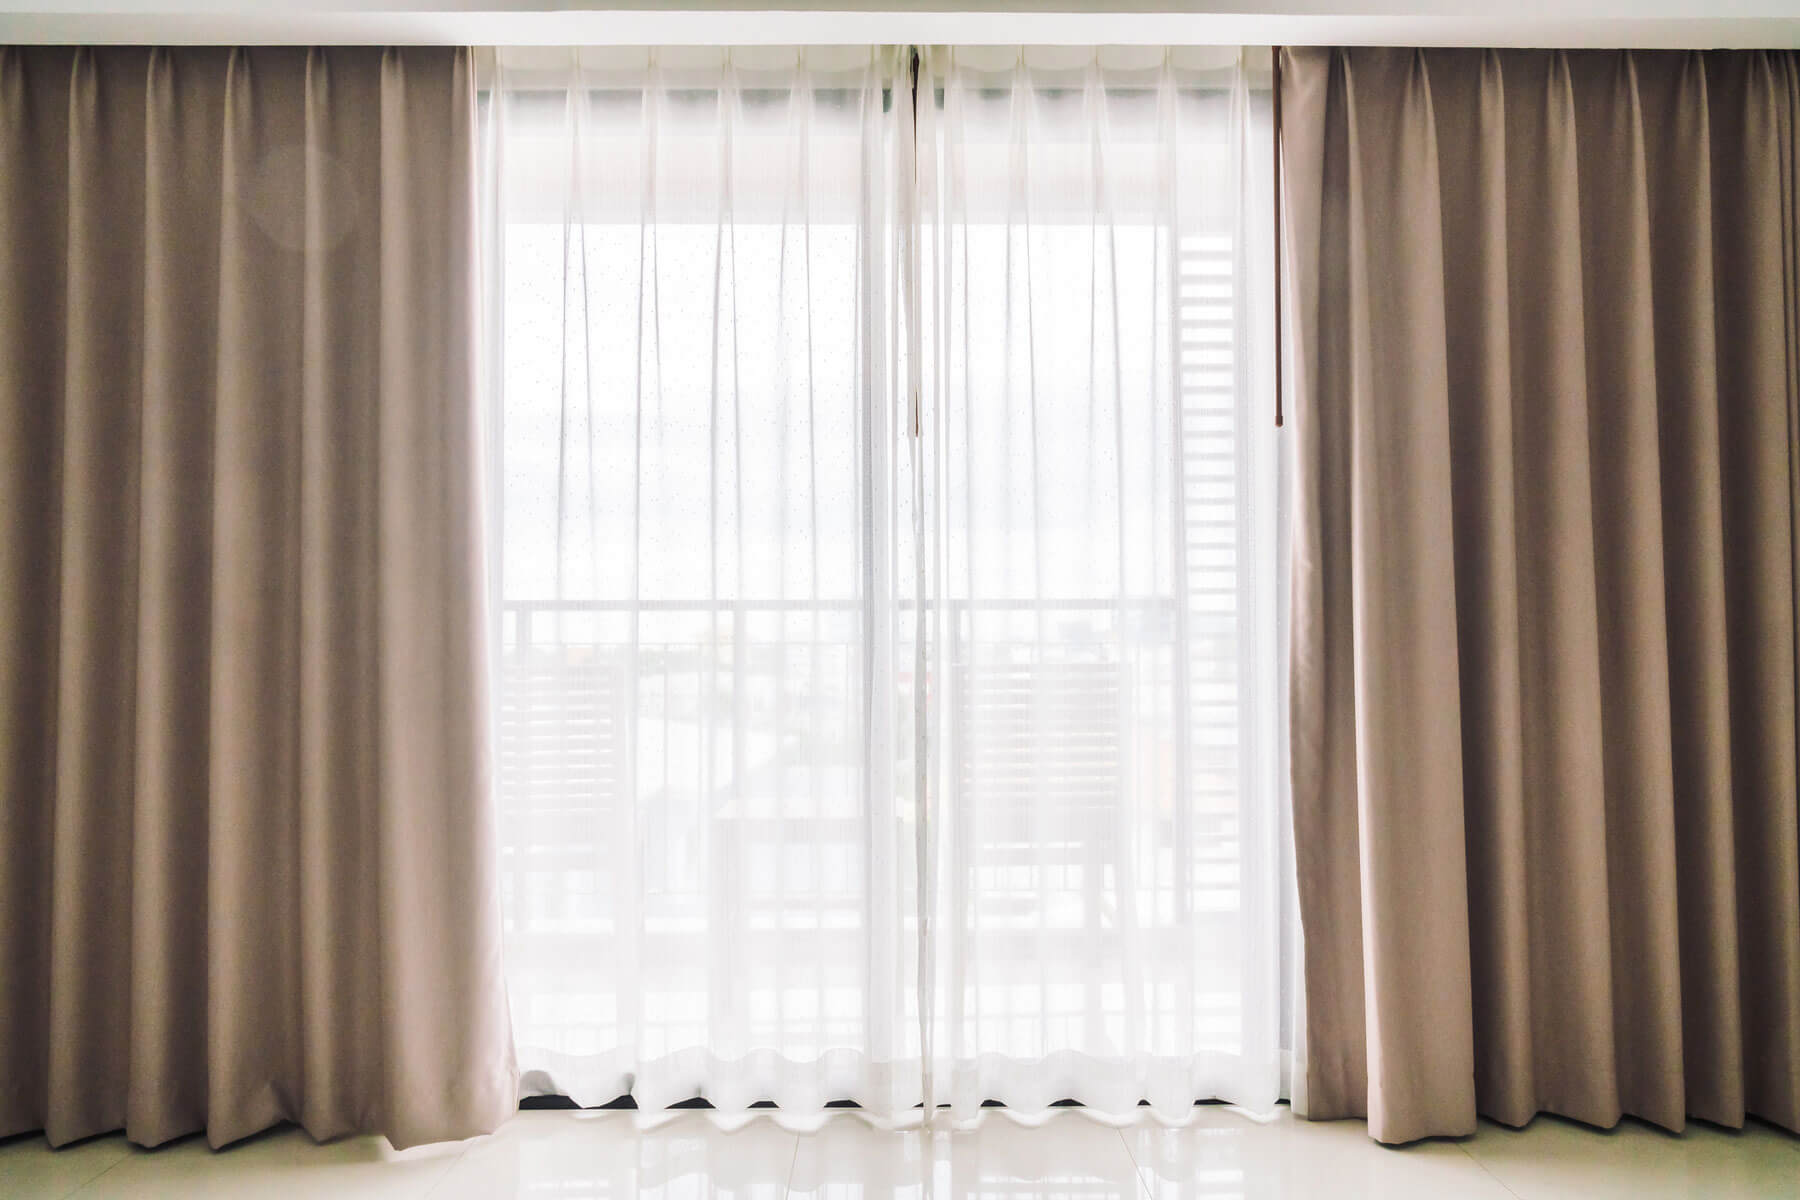 Window drapes